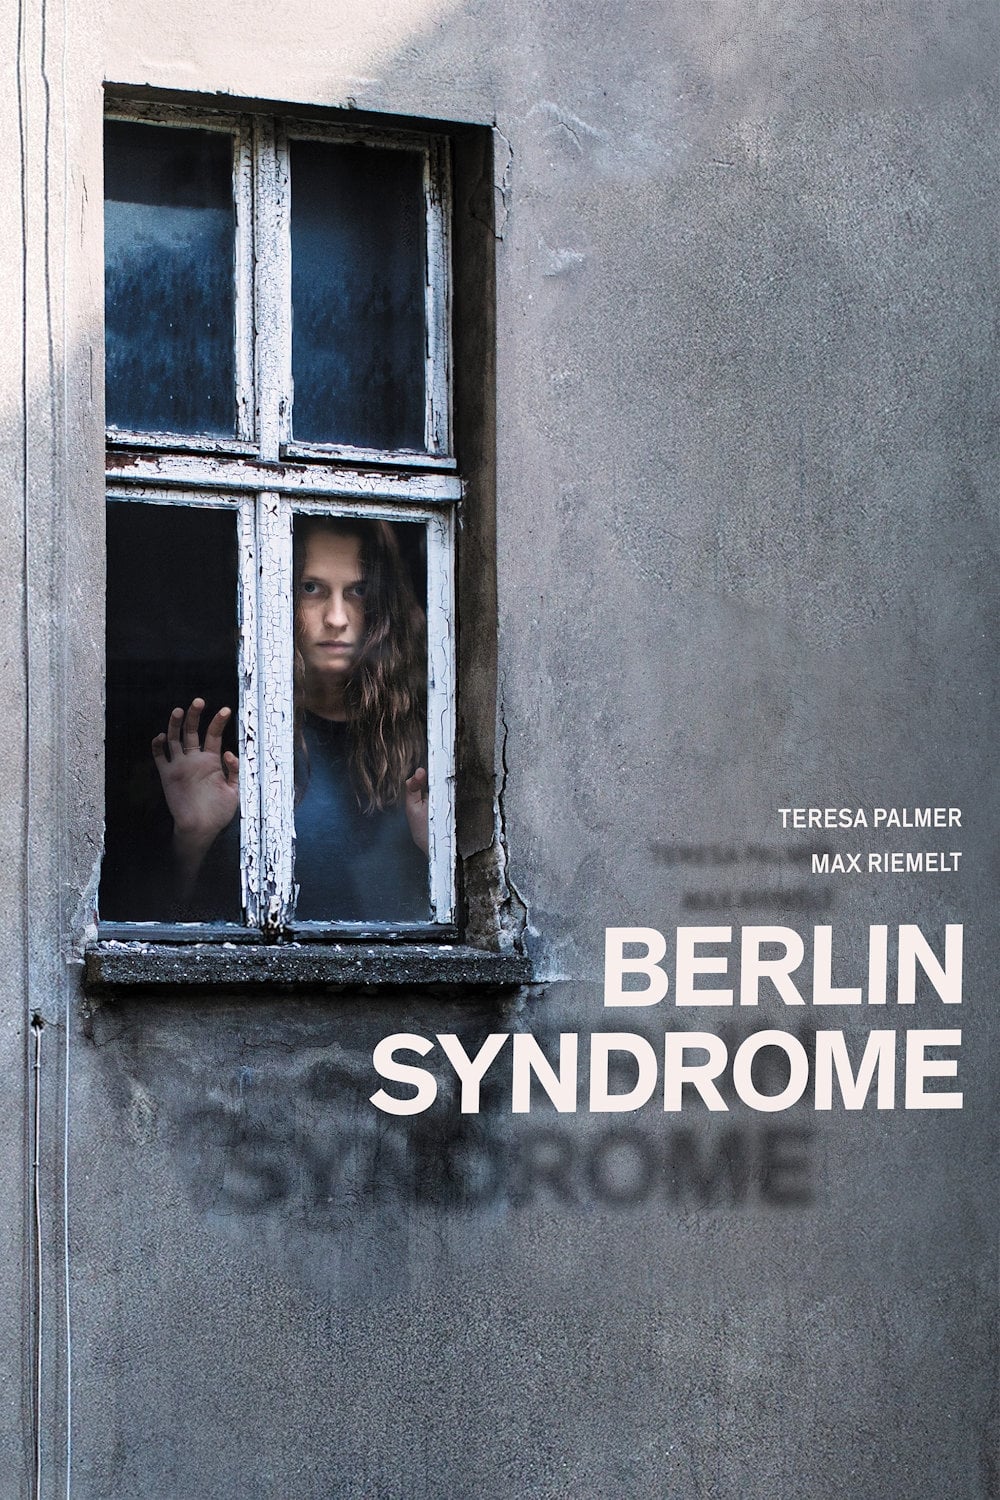 Berlin Syndrome [HD] (2017)